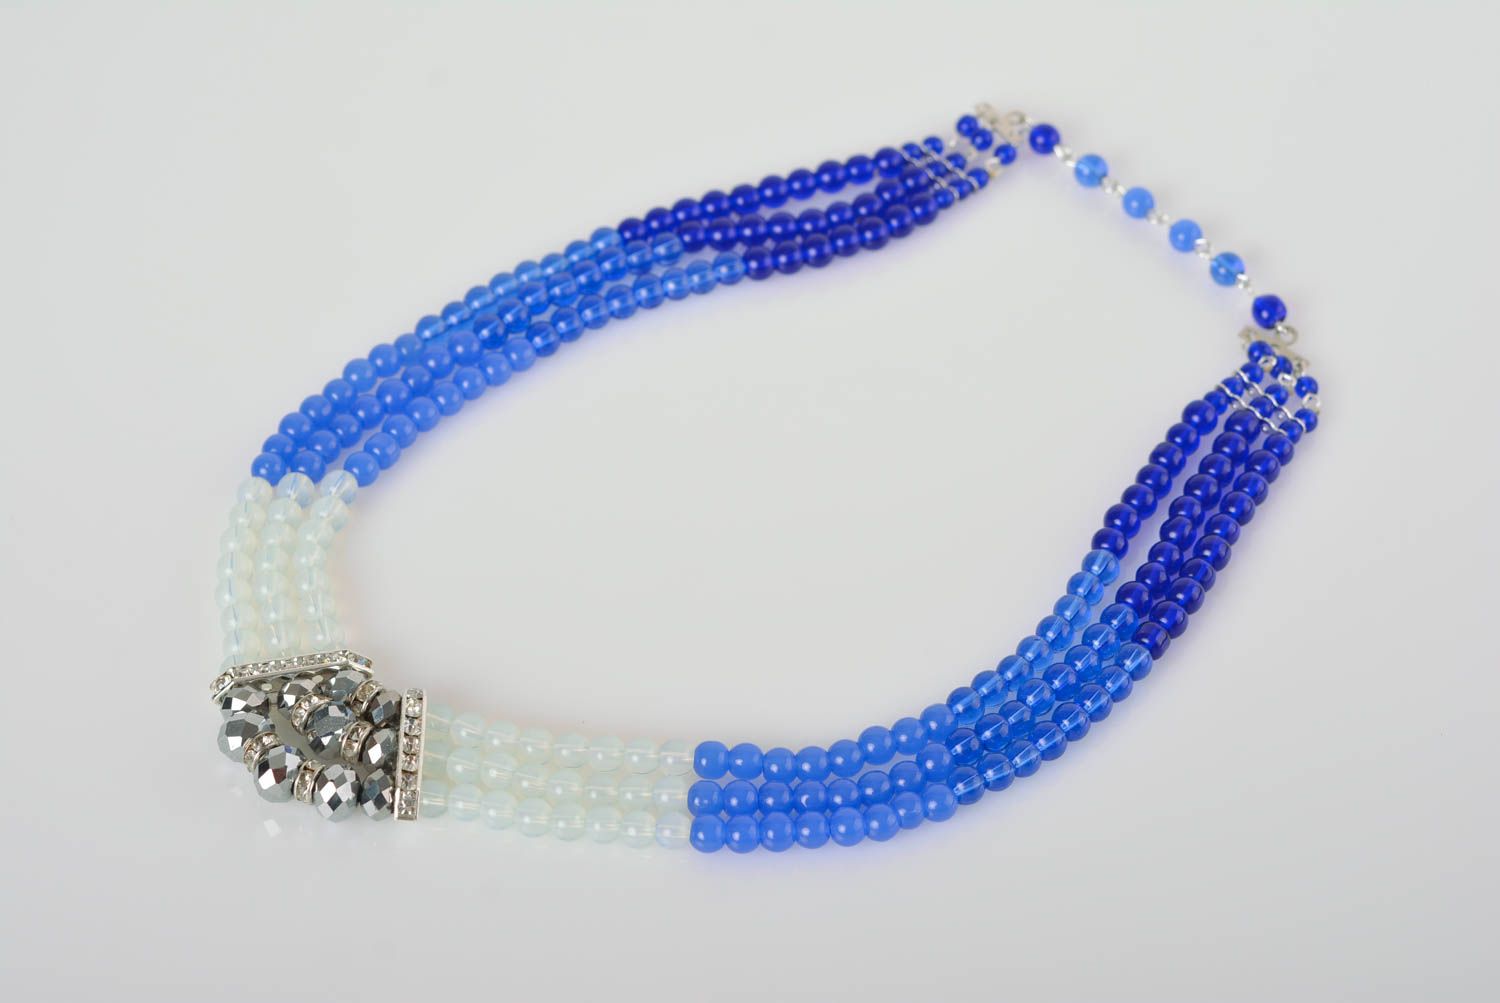 Beautiful handmade beaded necklace artisan jewelry woven bead necklace photo 1